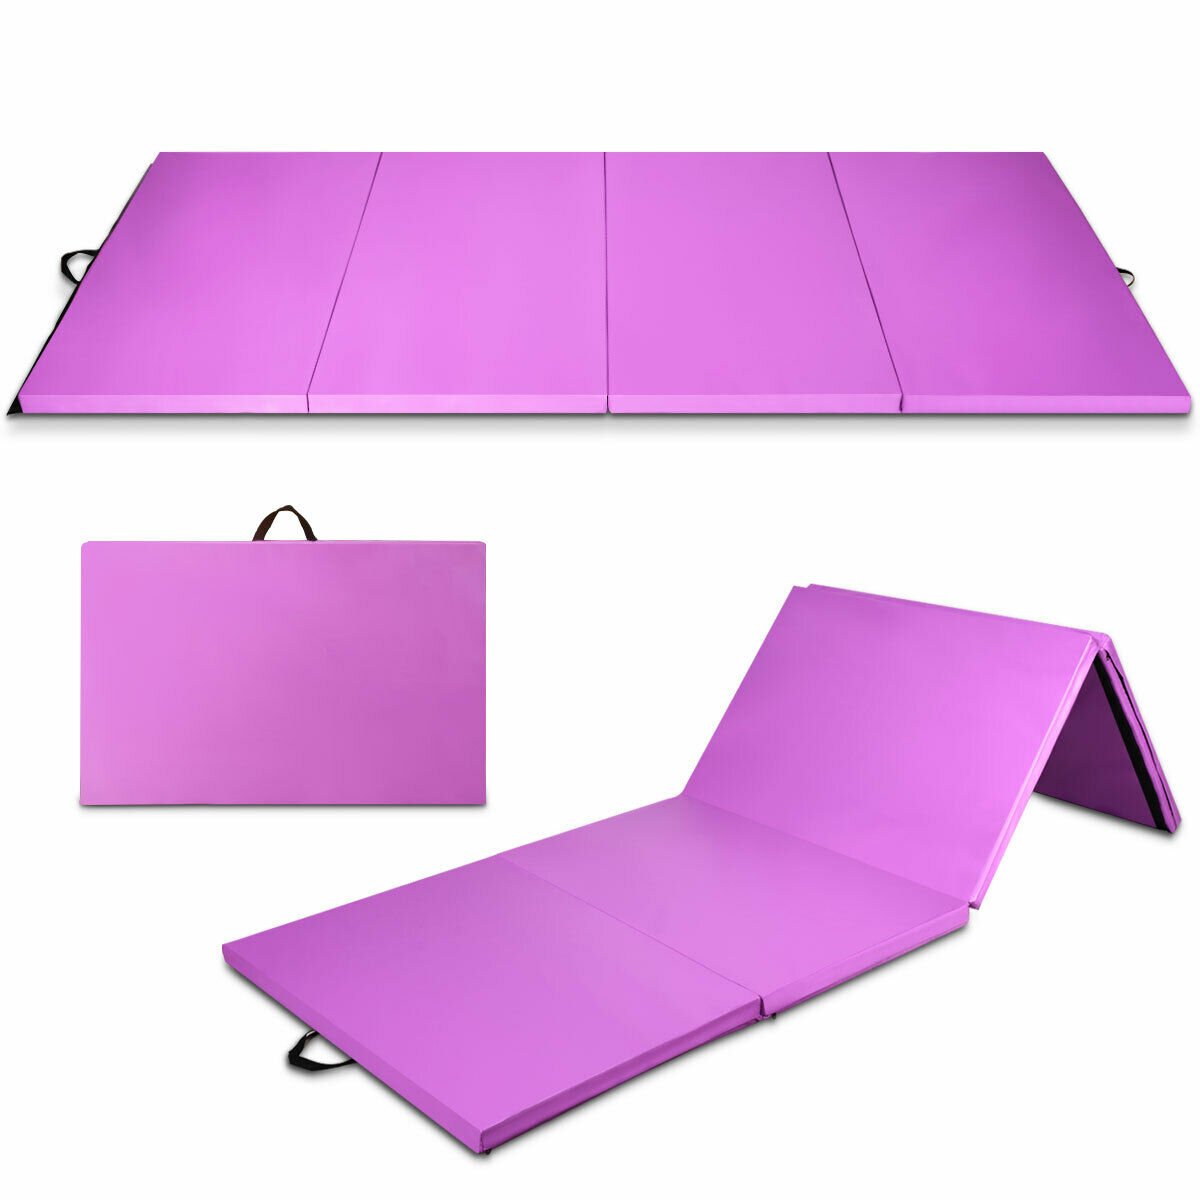 8 x 4 Feet Folding Gymnastics Tumbling Mat, Purple at Gallery Canada